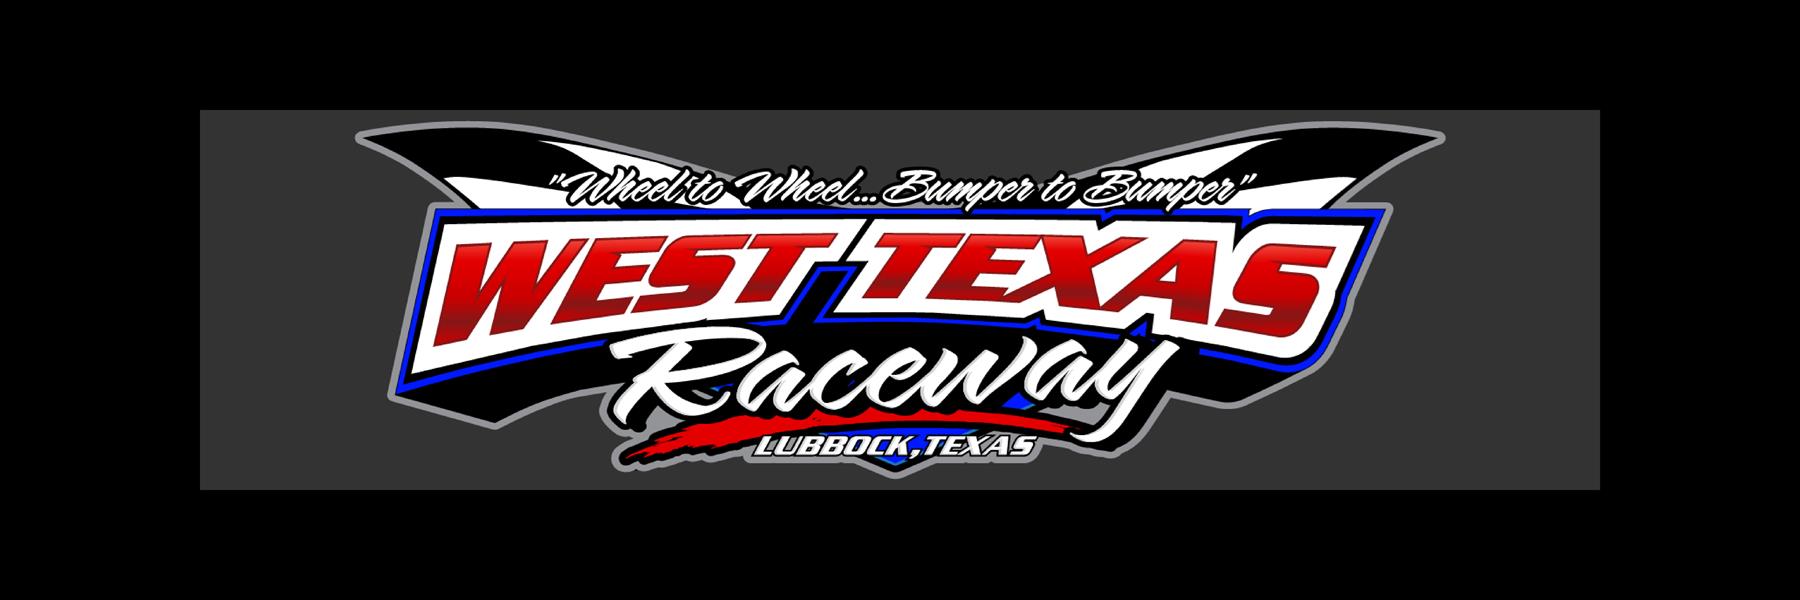 8/14/2020 - West Texas Raceway